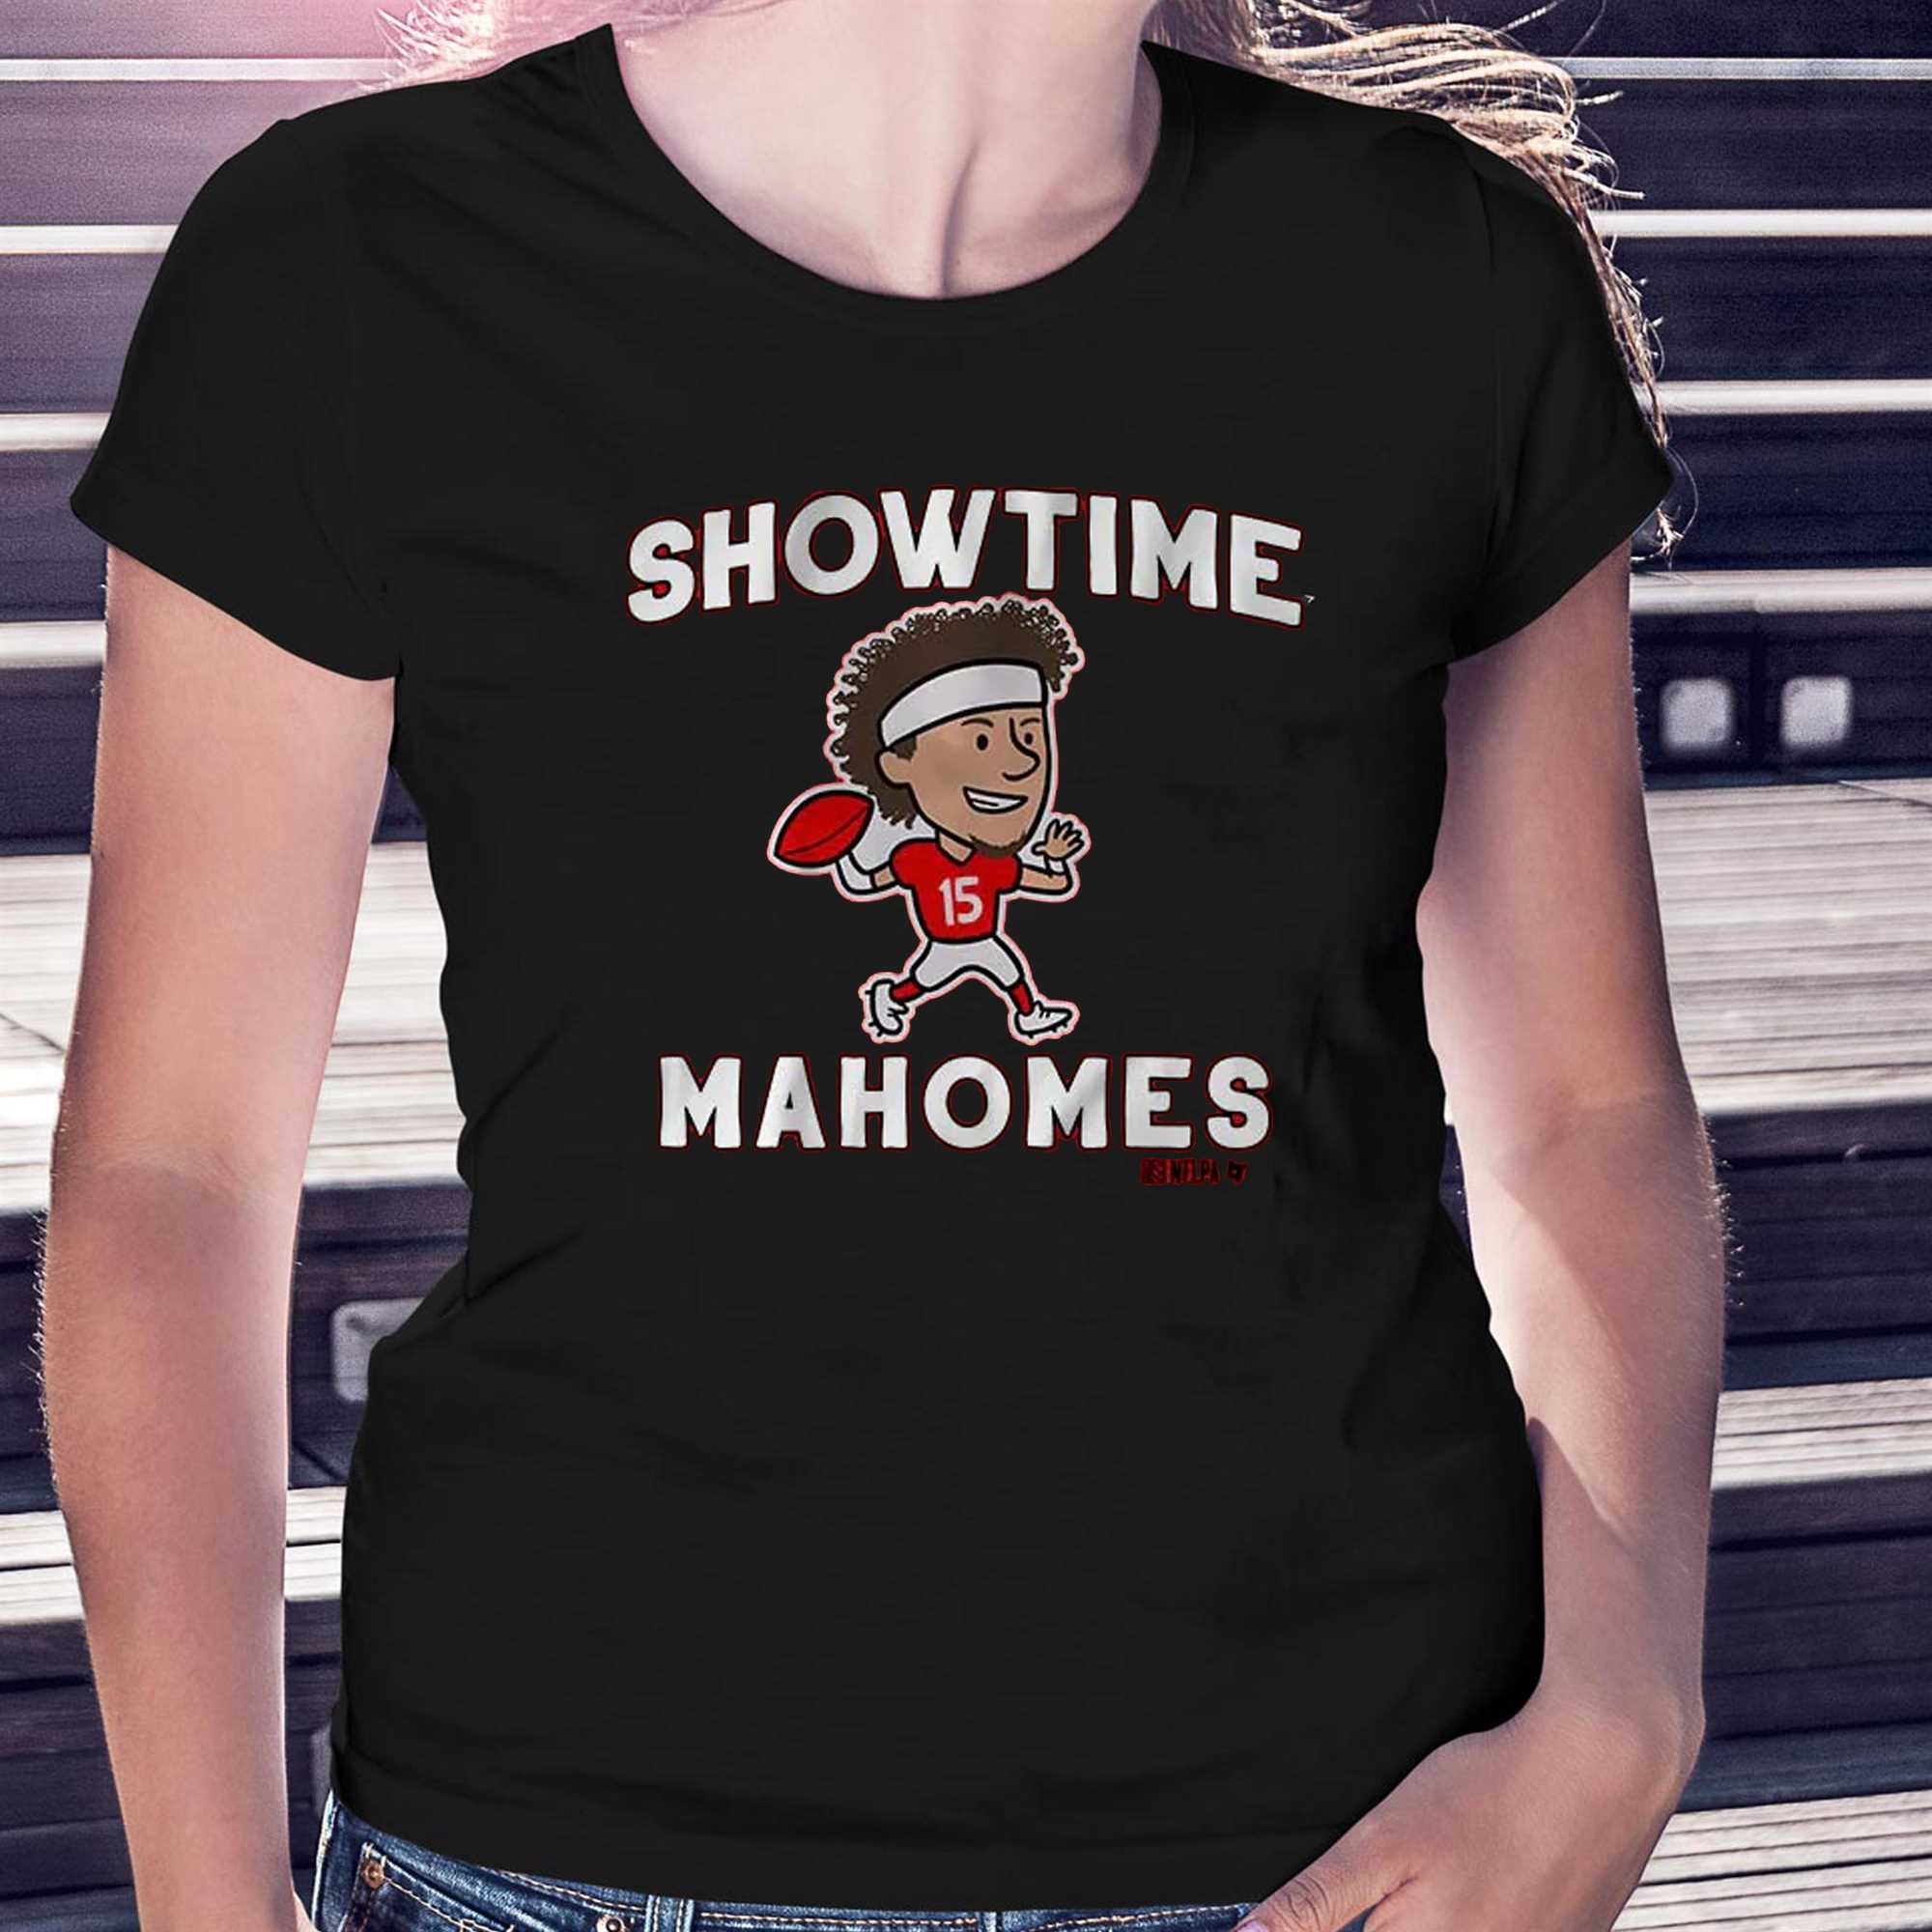 mahomes showtime shirt